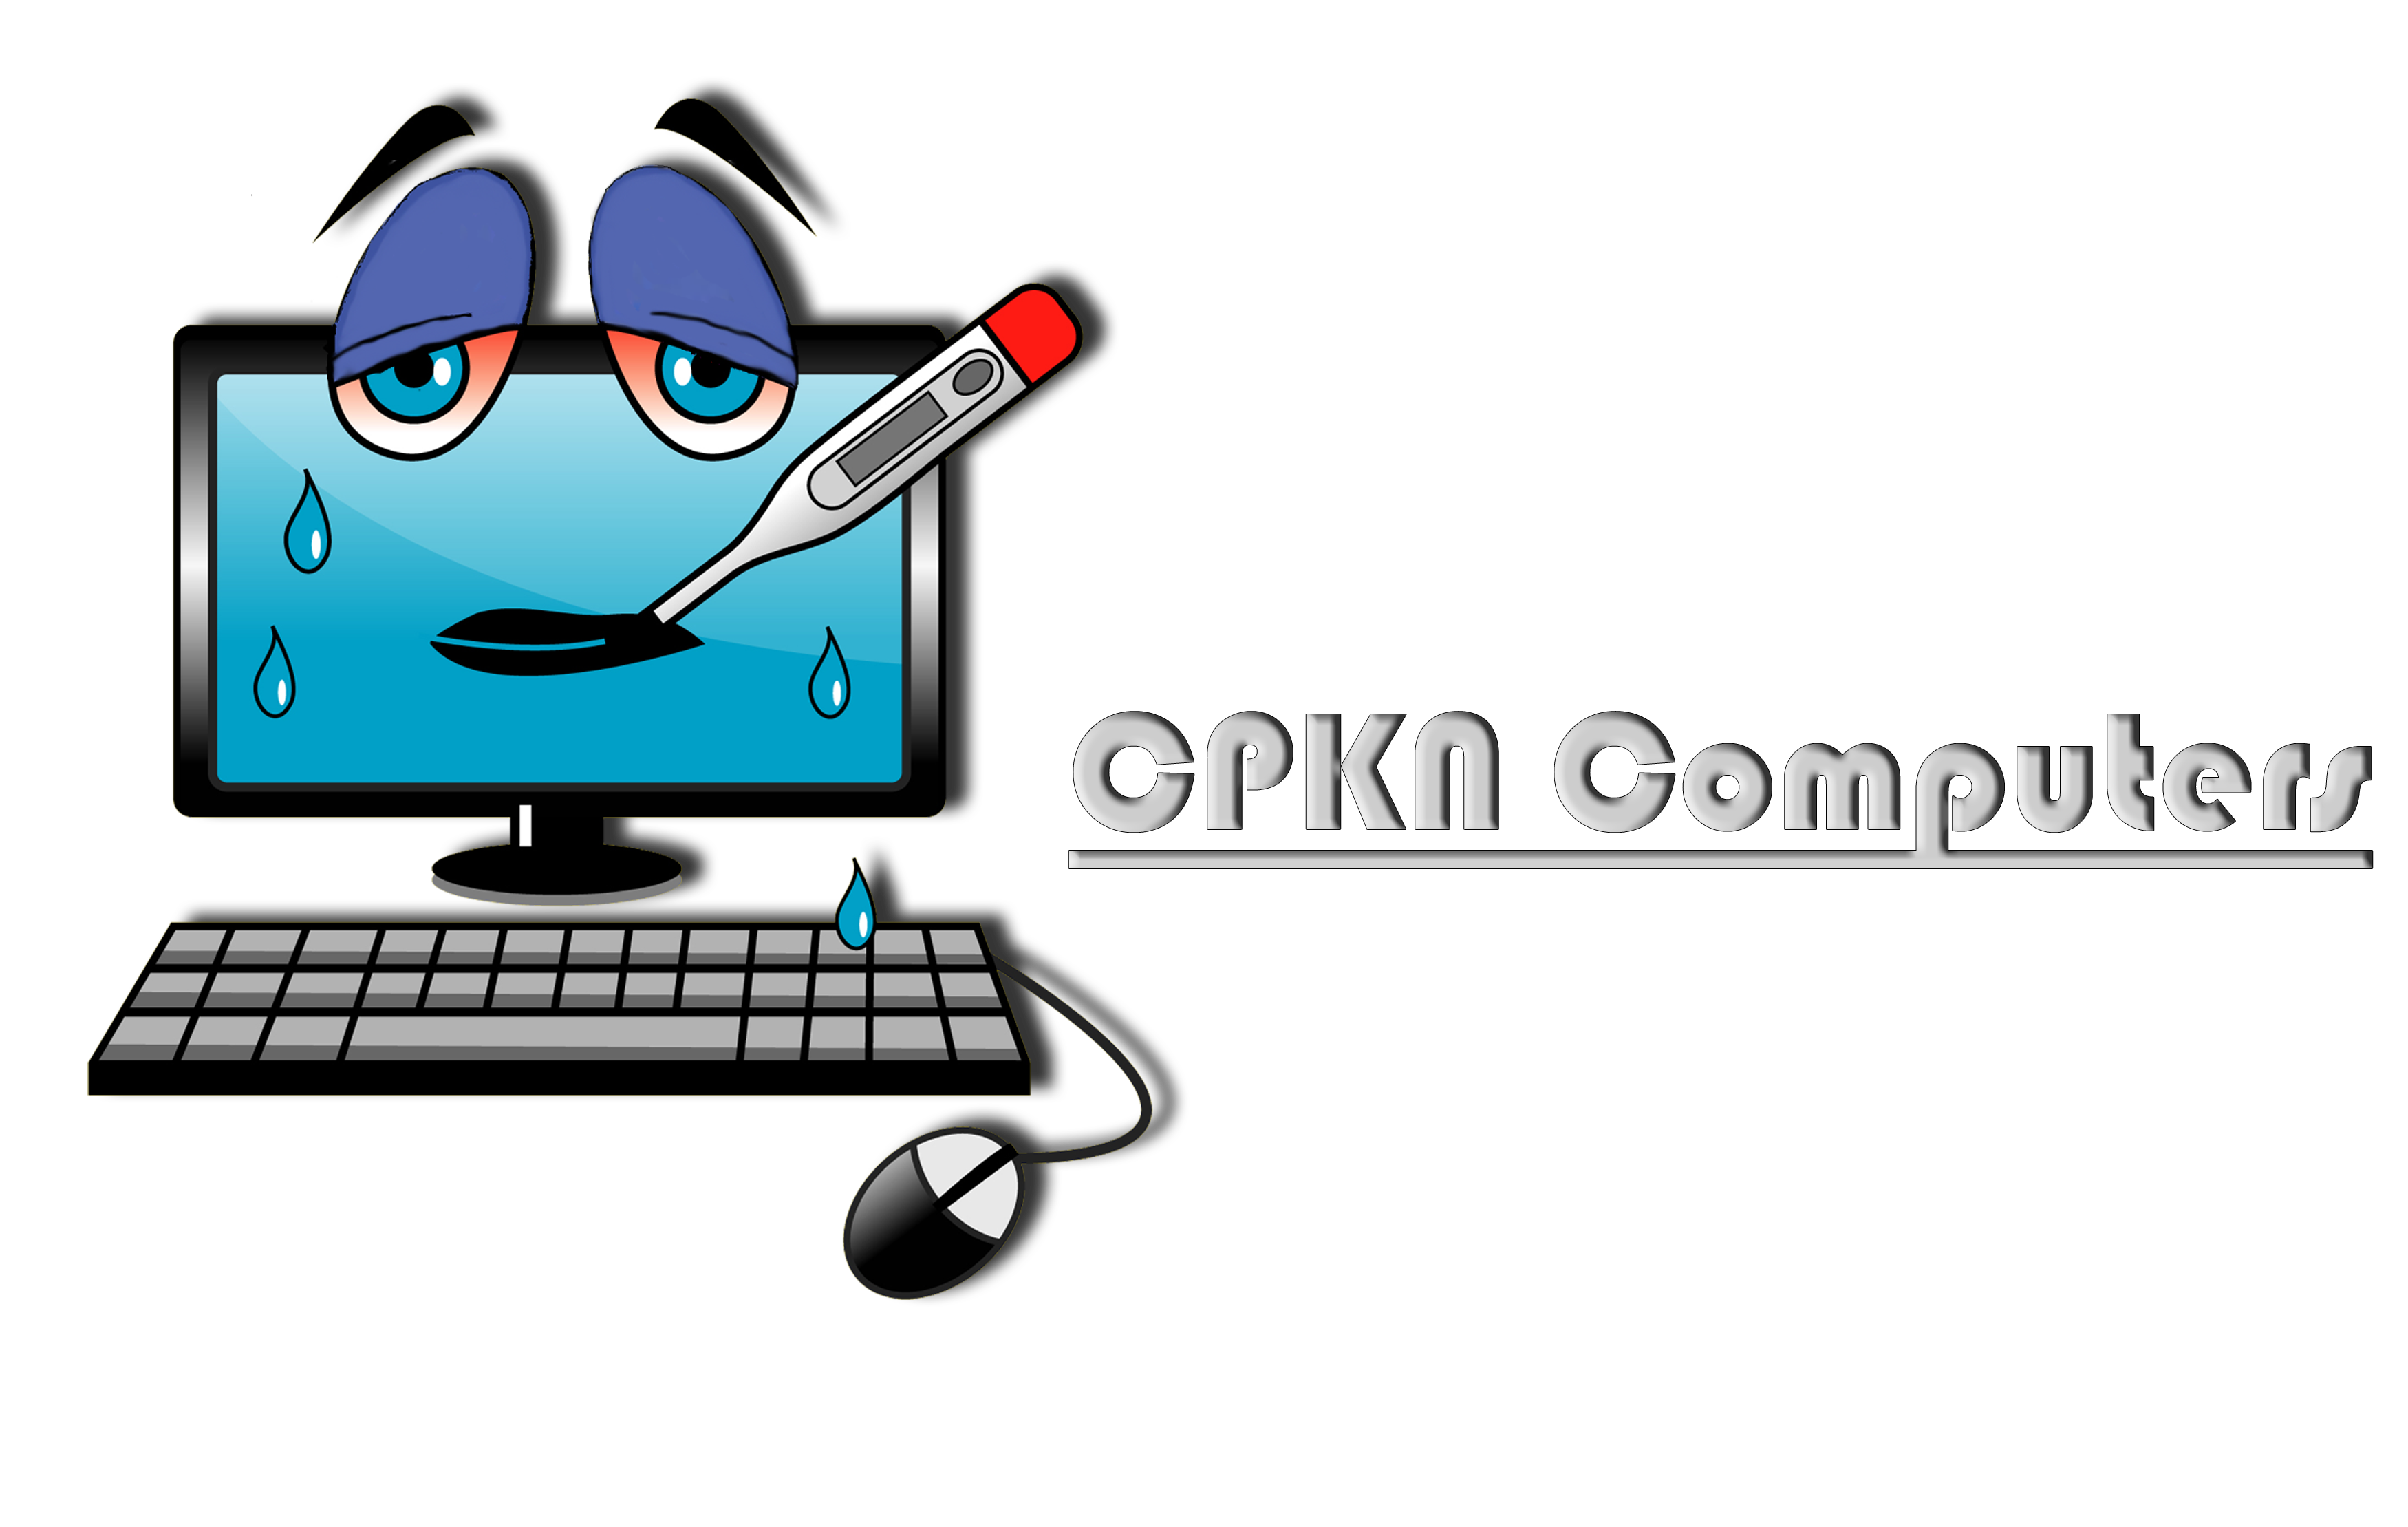 CPKN Computers